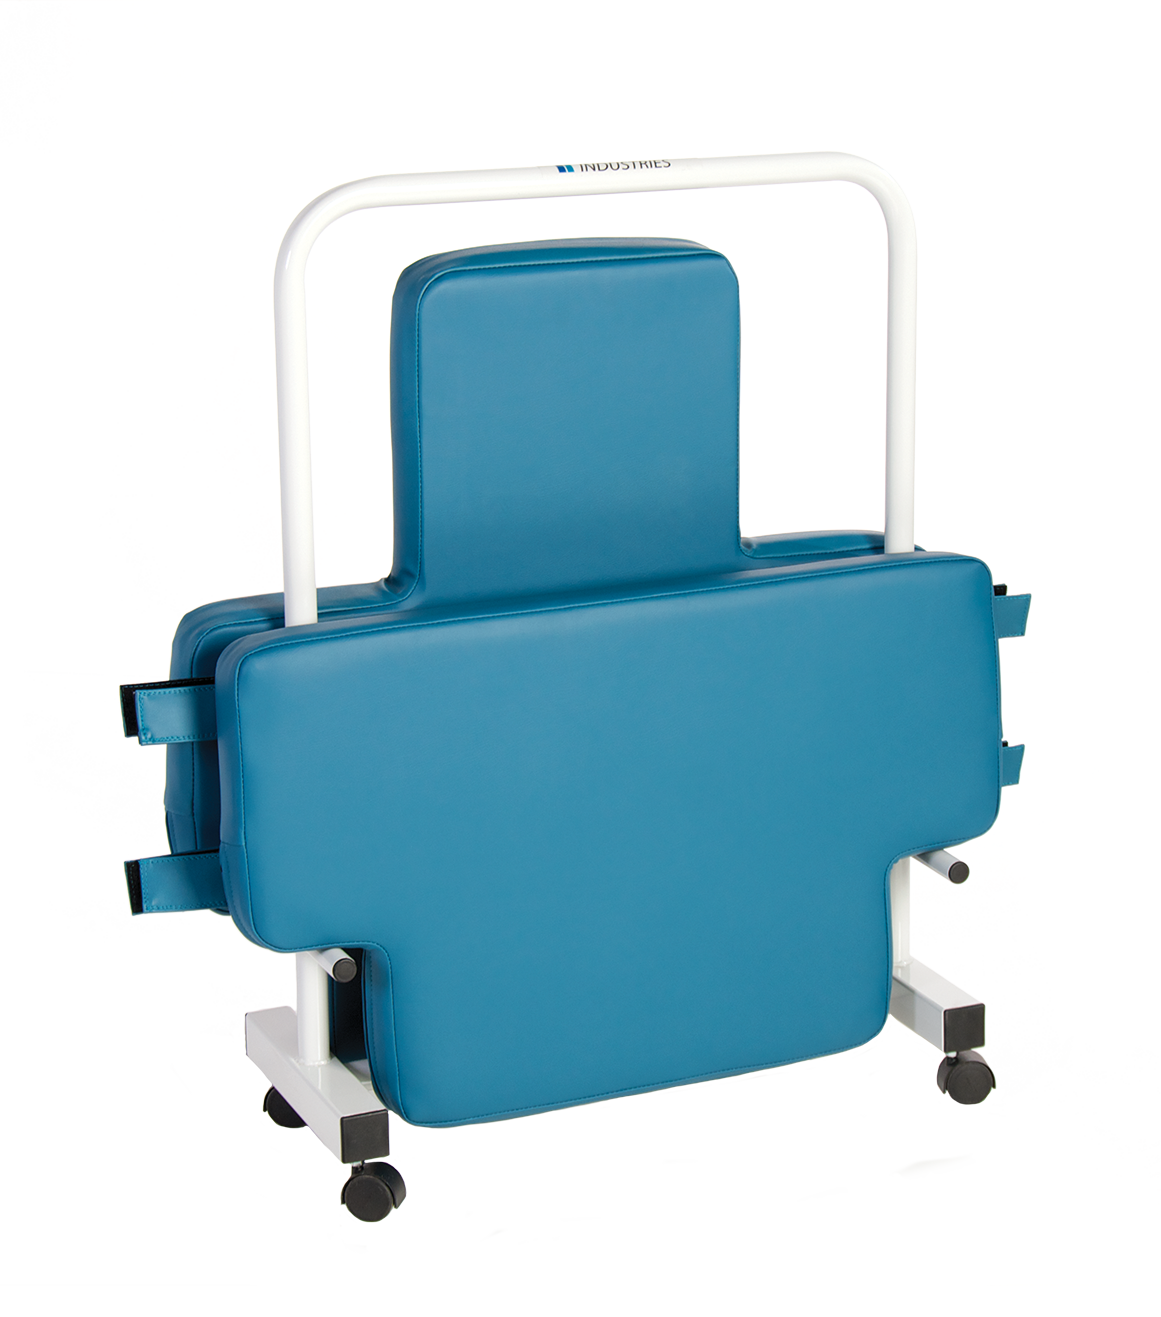 chest plate, knee blocker with storage cart